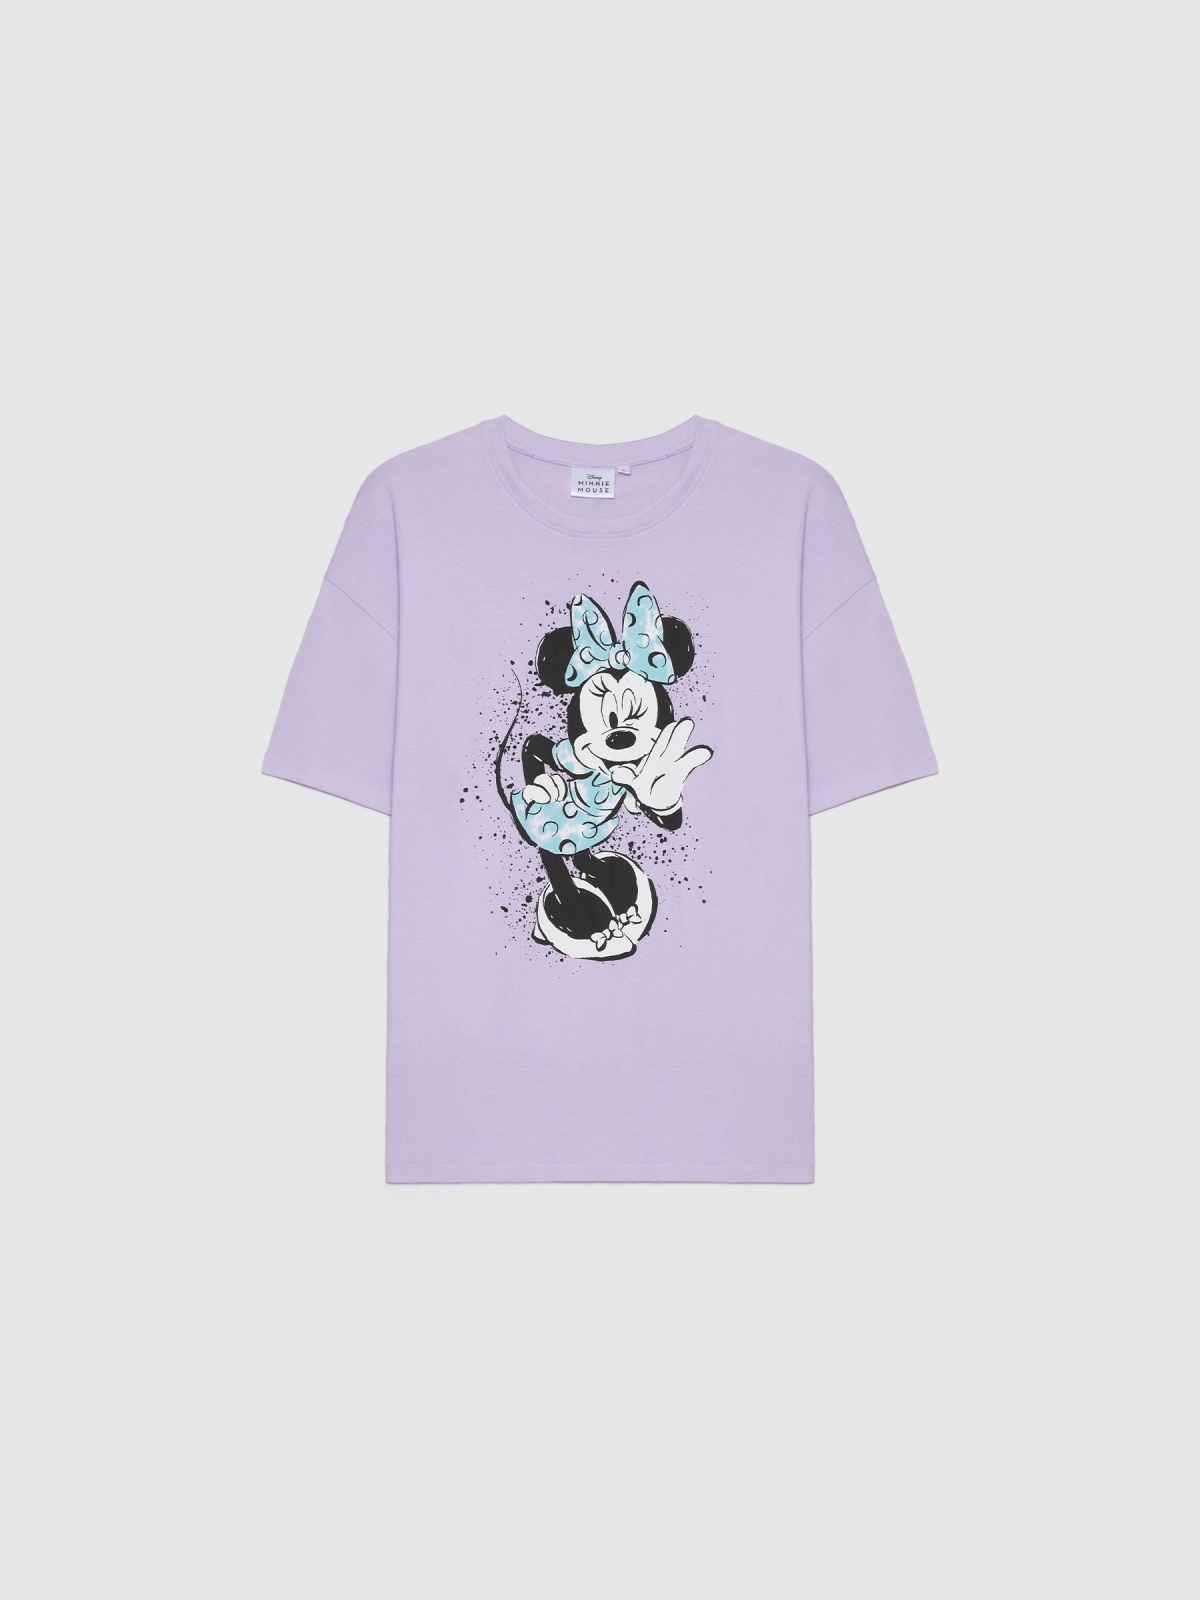  Camiseta oversize Minnie Mouse lila